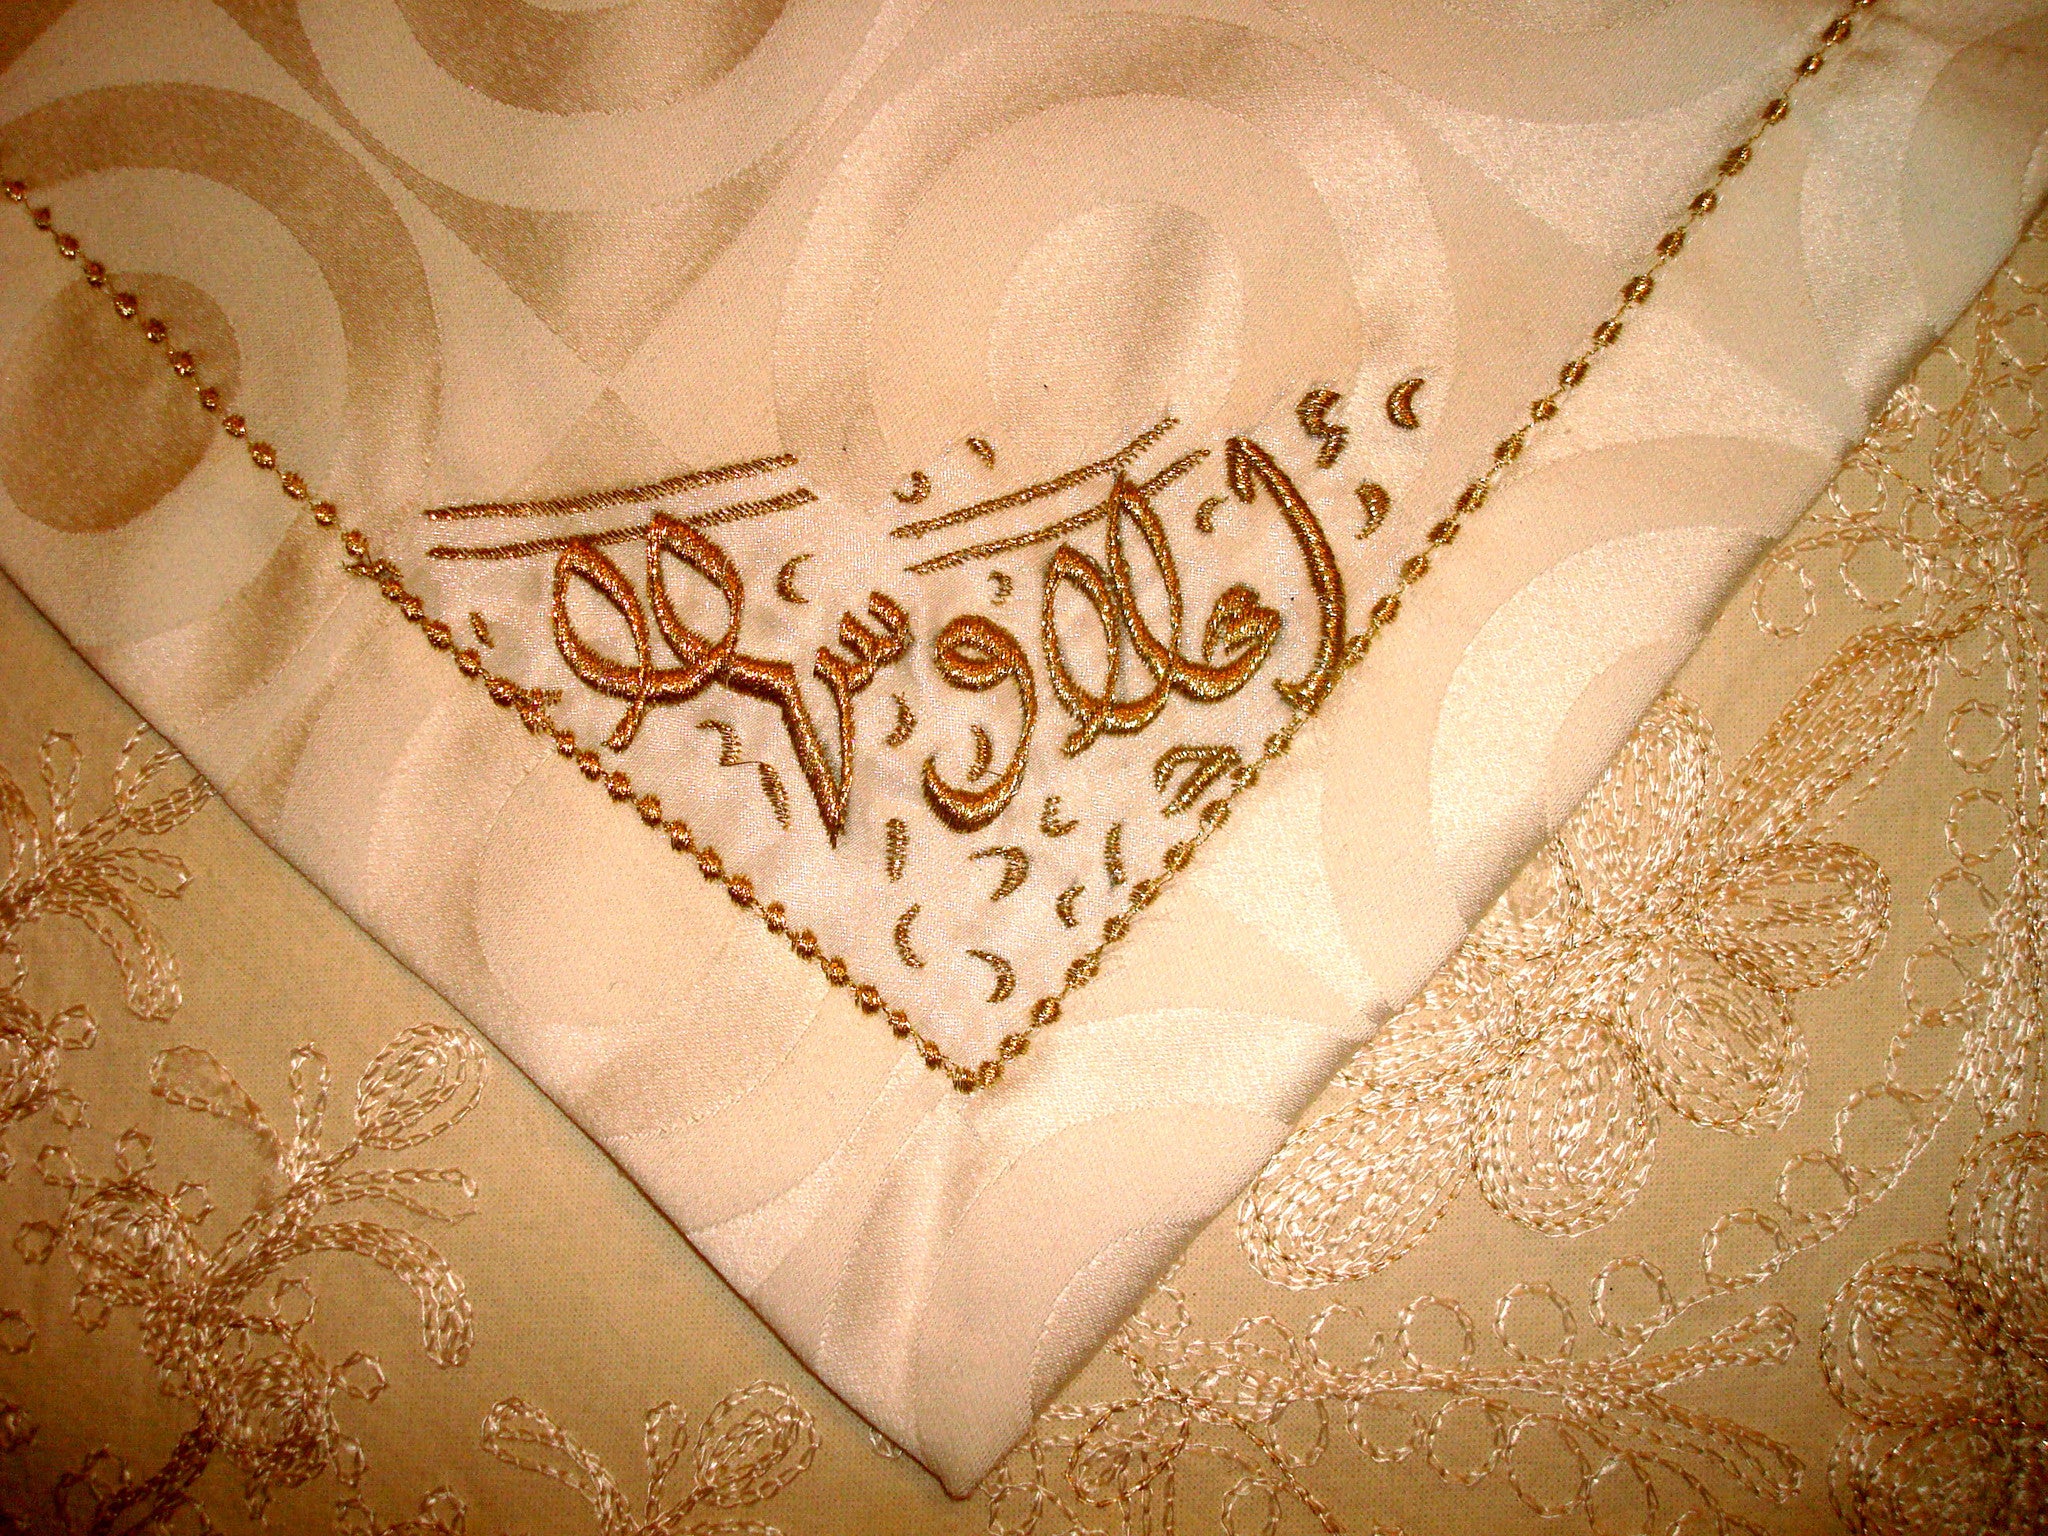 Customized Embroidered Napkins & Table Cloth for Weddings & More|شرشف لتزيين الطاولة ومناديل مصممة على الطلب للاعراس والمناسبات الاخرى